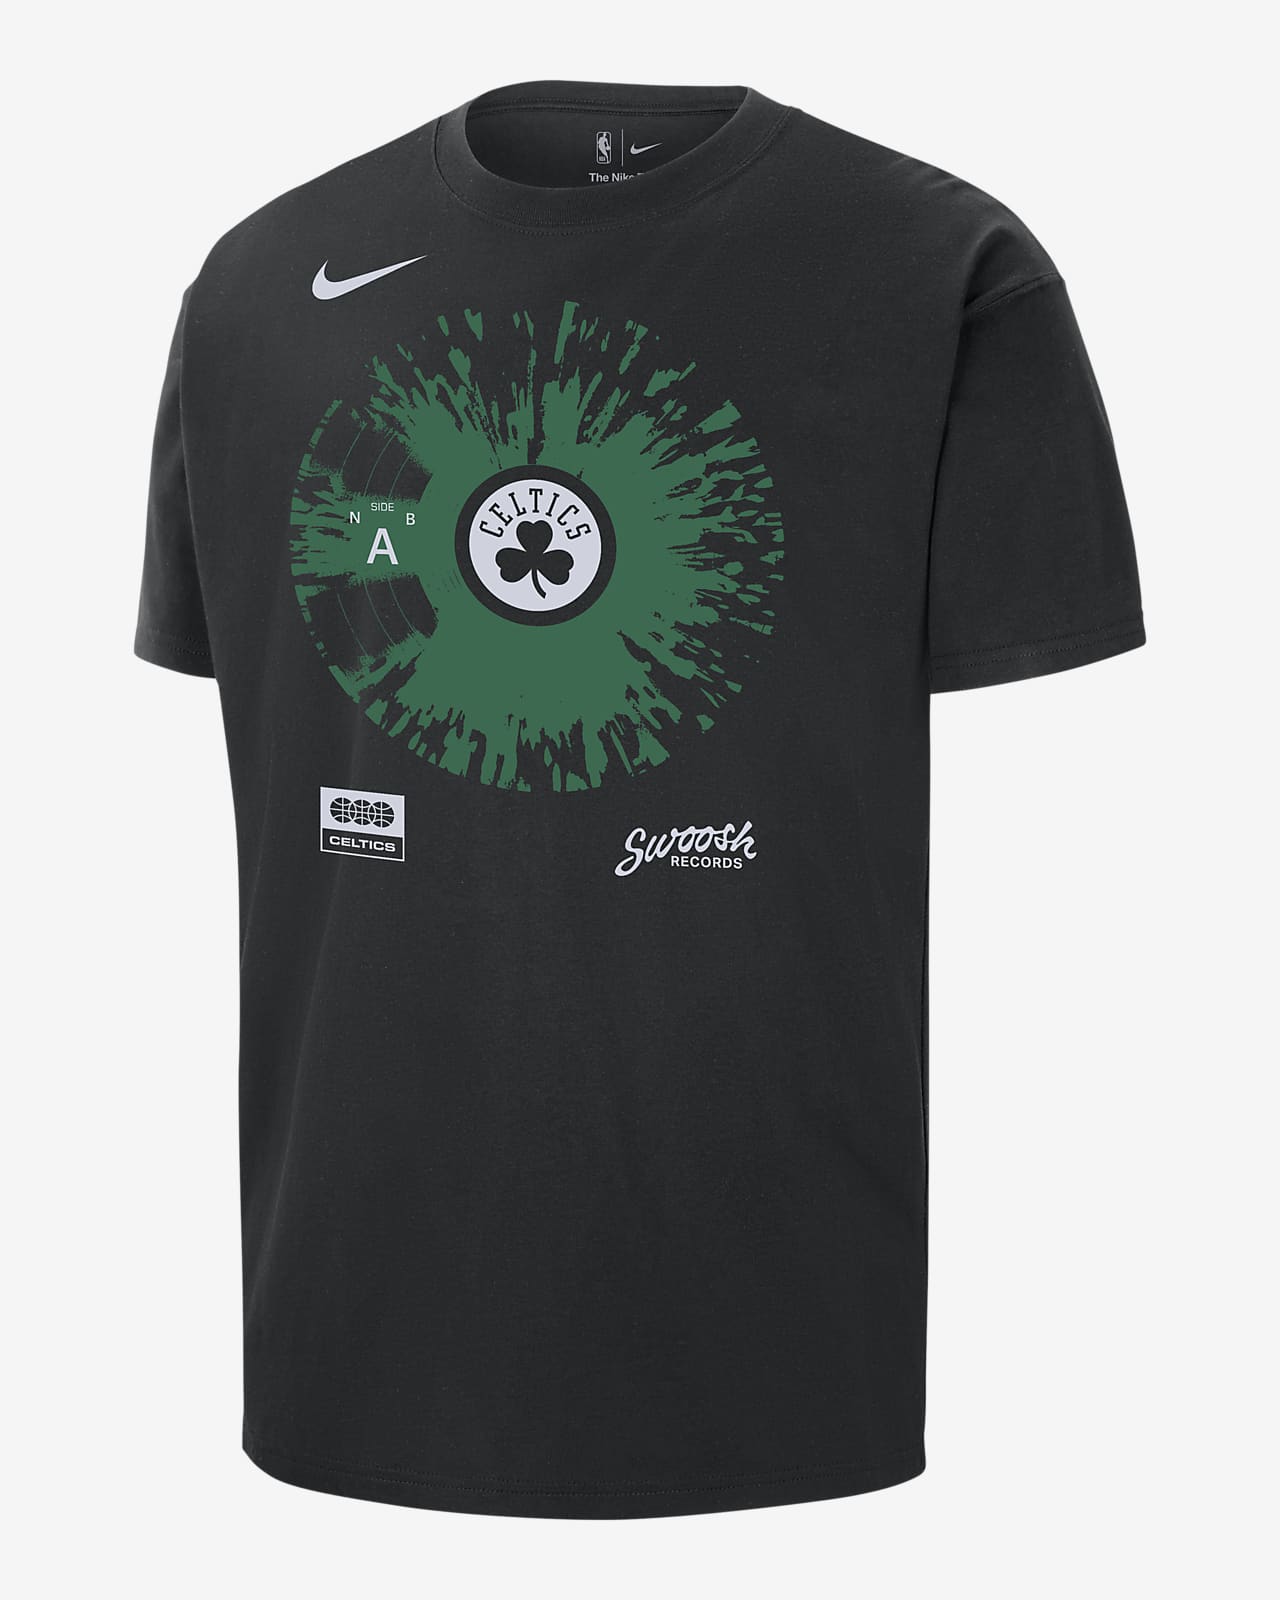 NBA Edition Hoodie Boston Celtics Size Medium Mens Black With Green Stripe